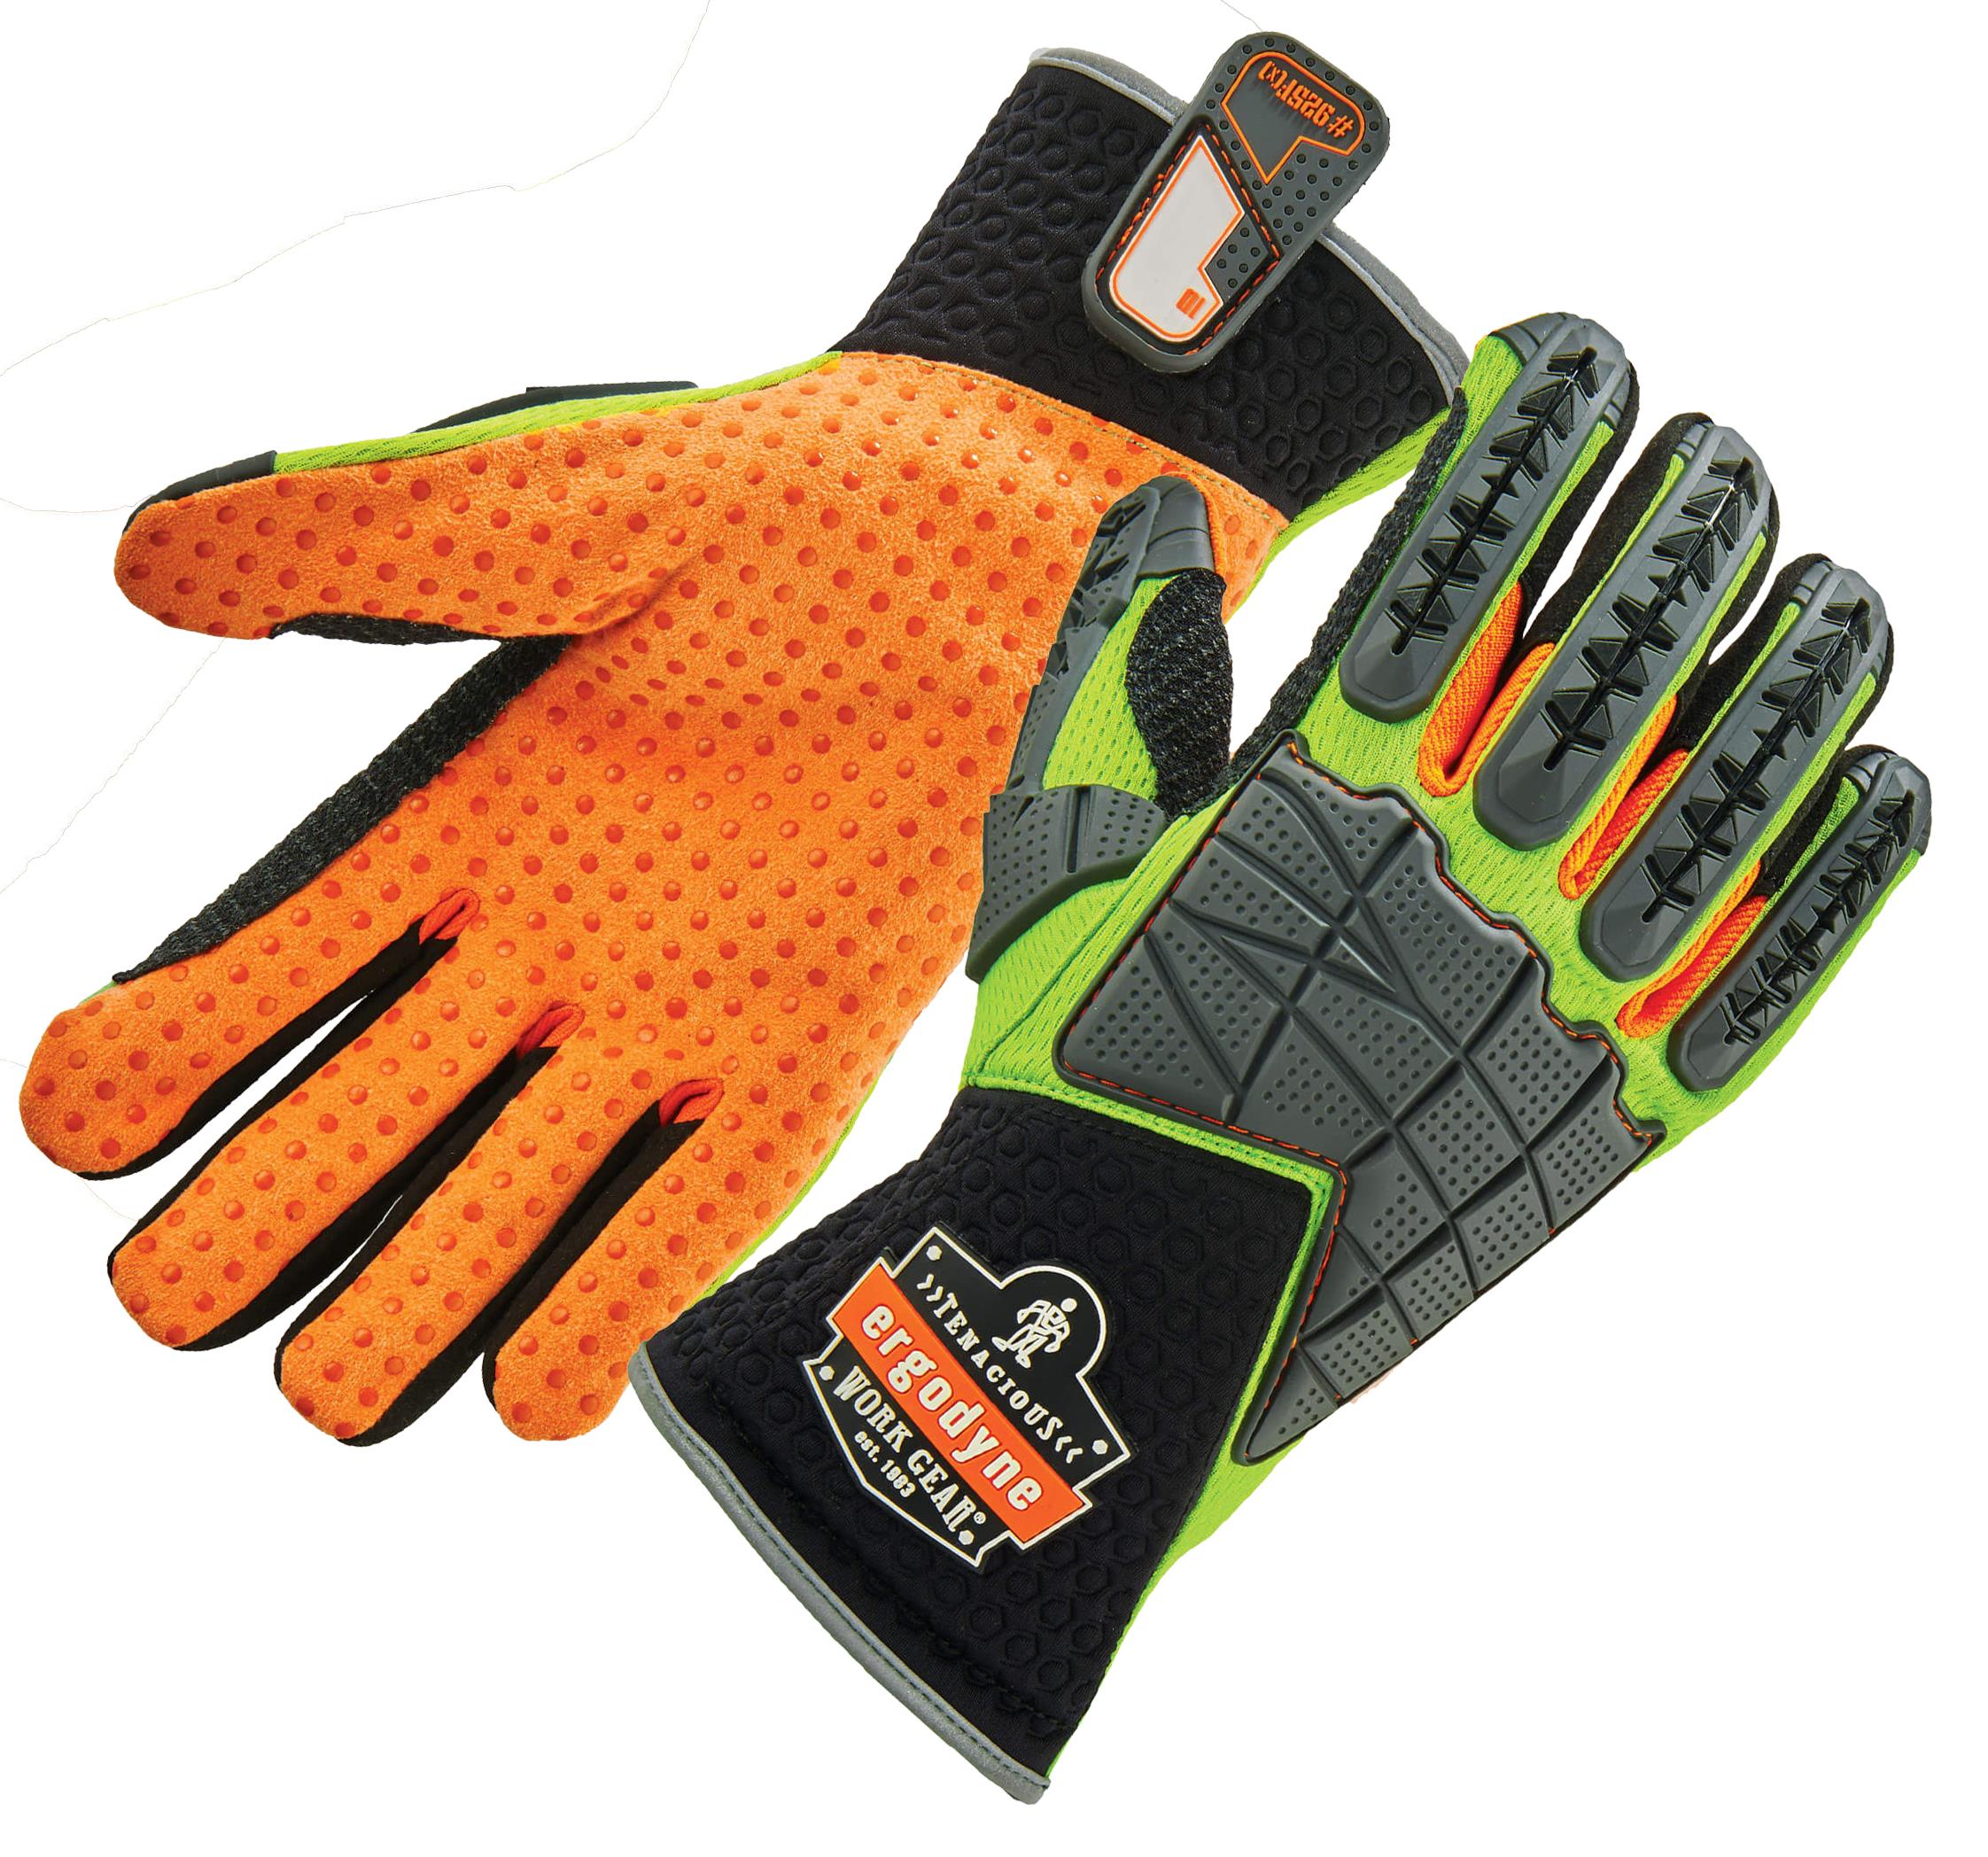 PROFLEX 925F(x) DORSAL IMPACT GLOVE - Dorsal Impact Gloves